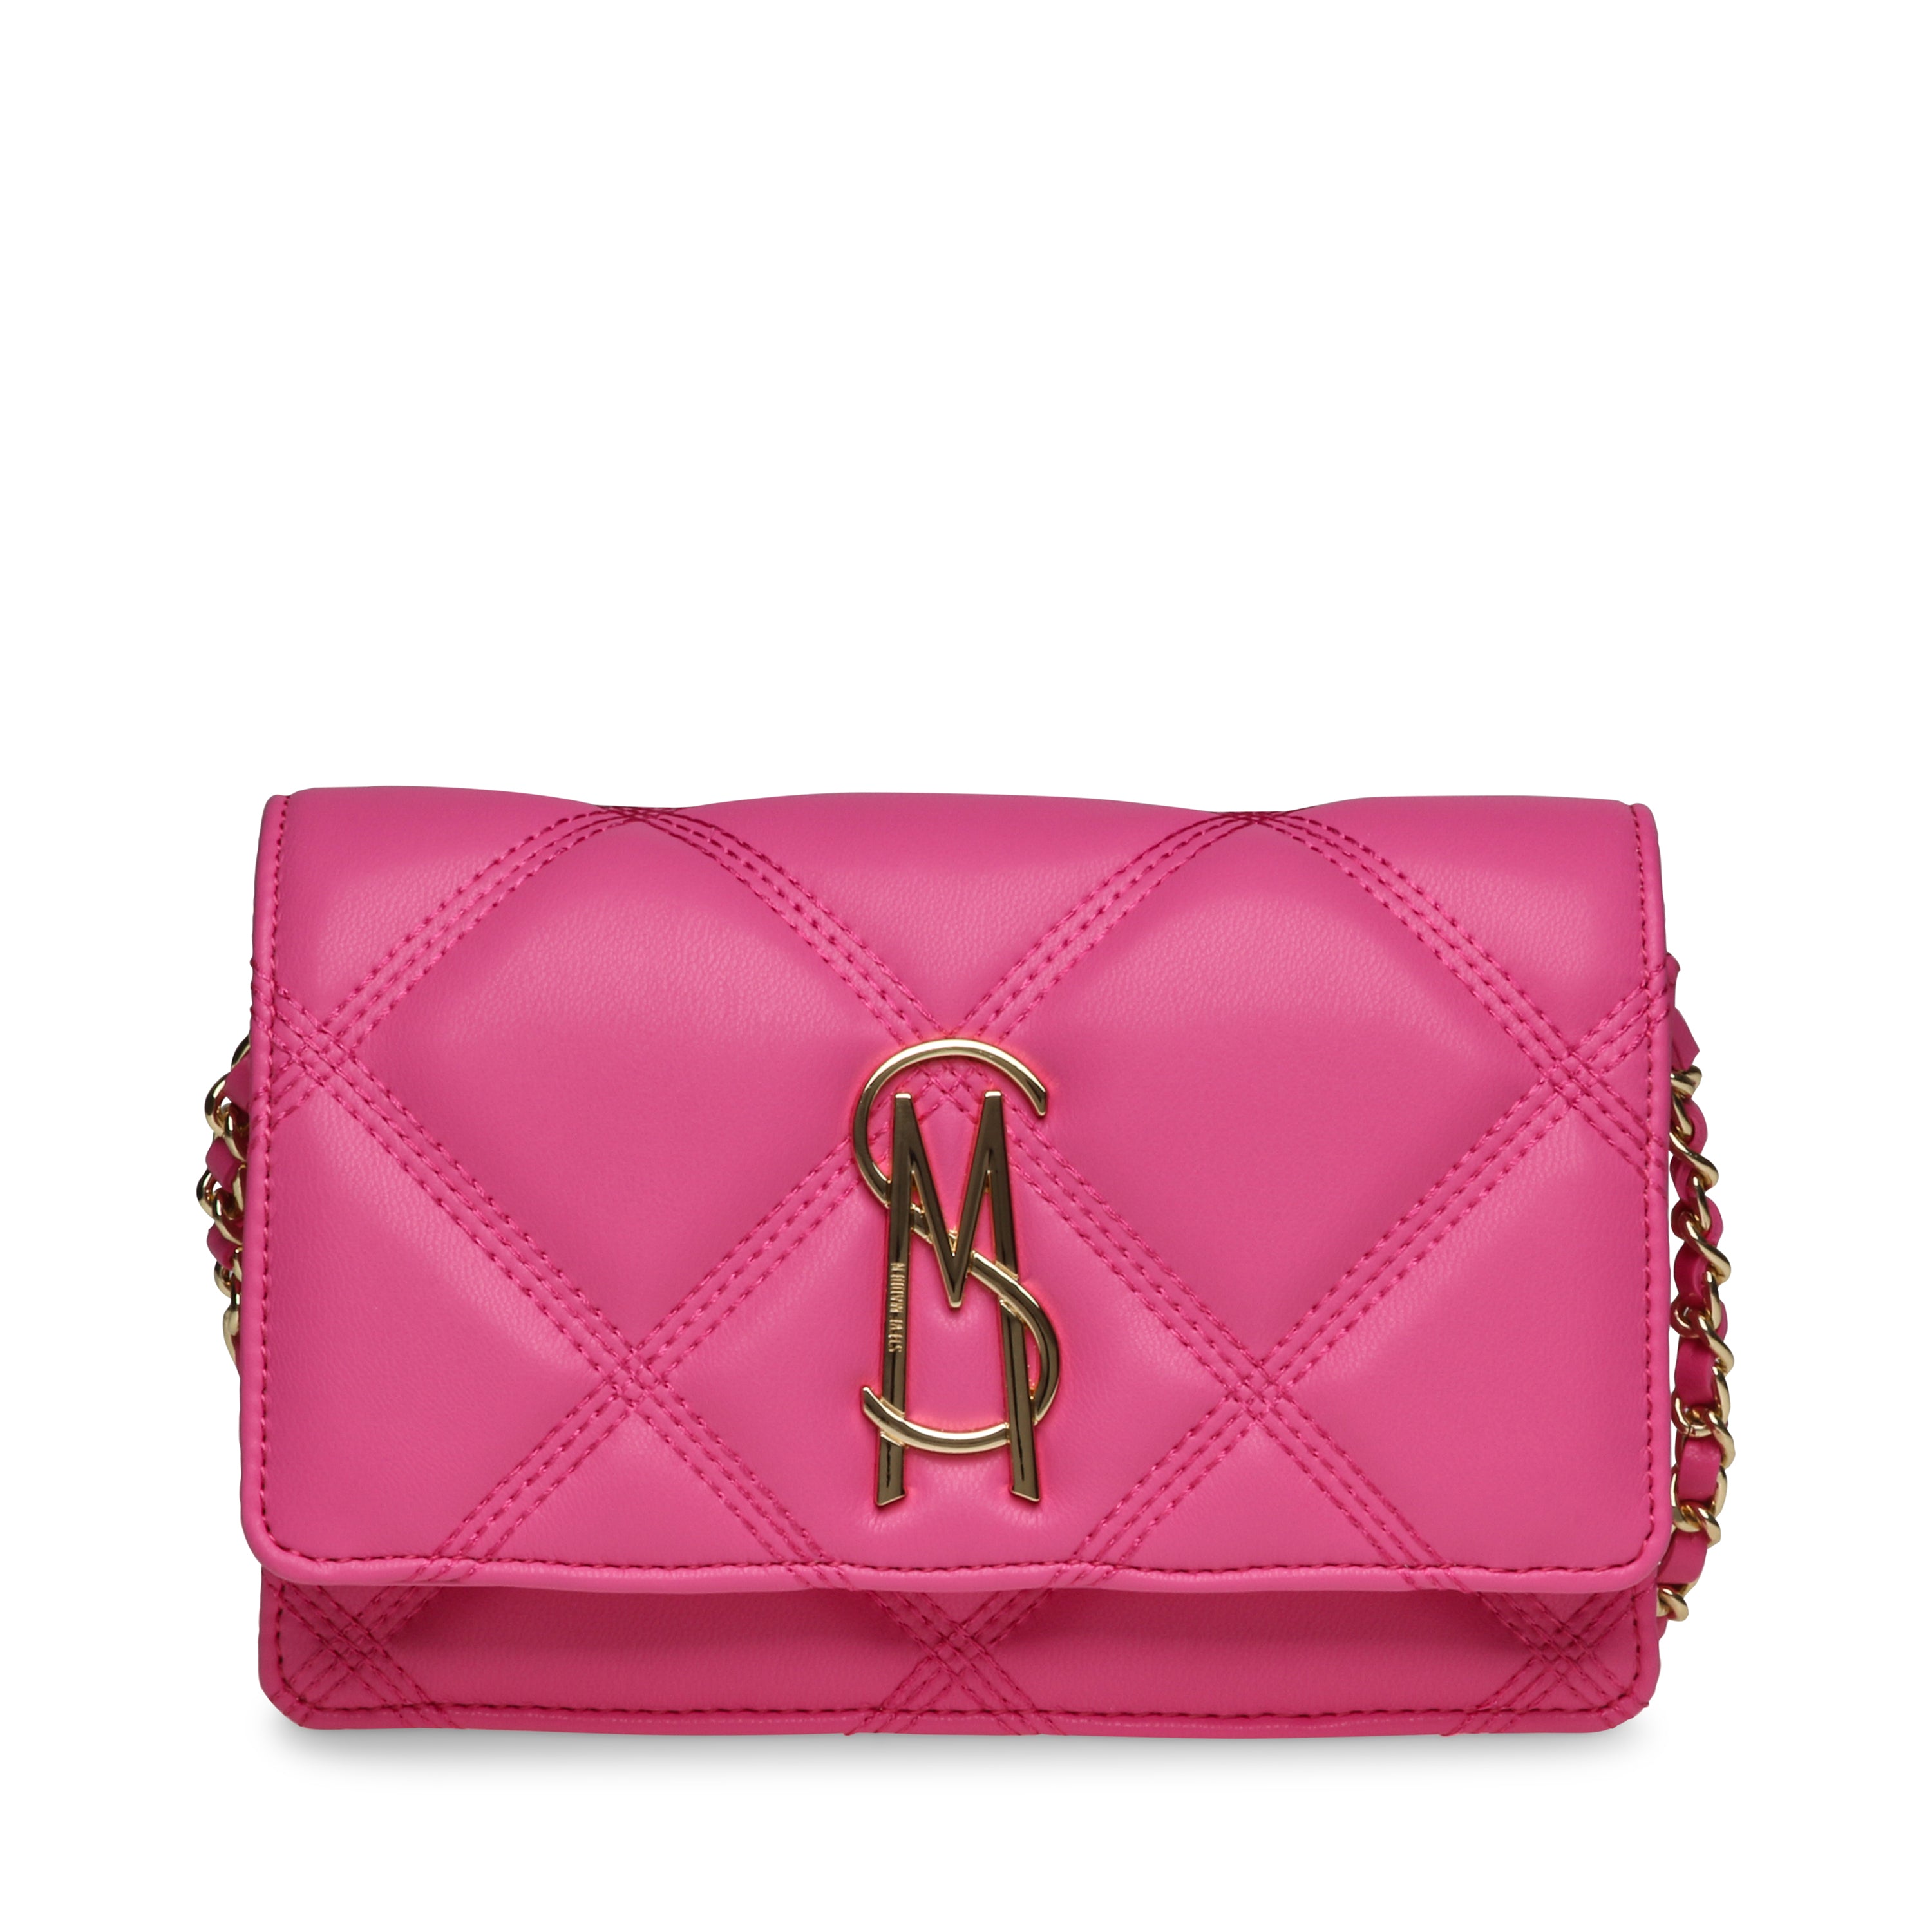 Bendue Crossbody Bag Pink